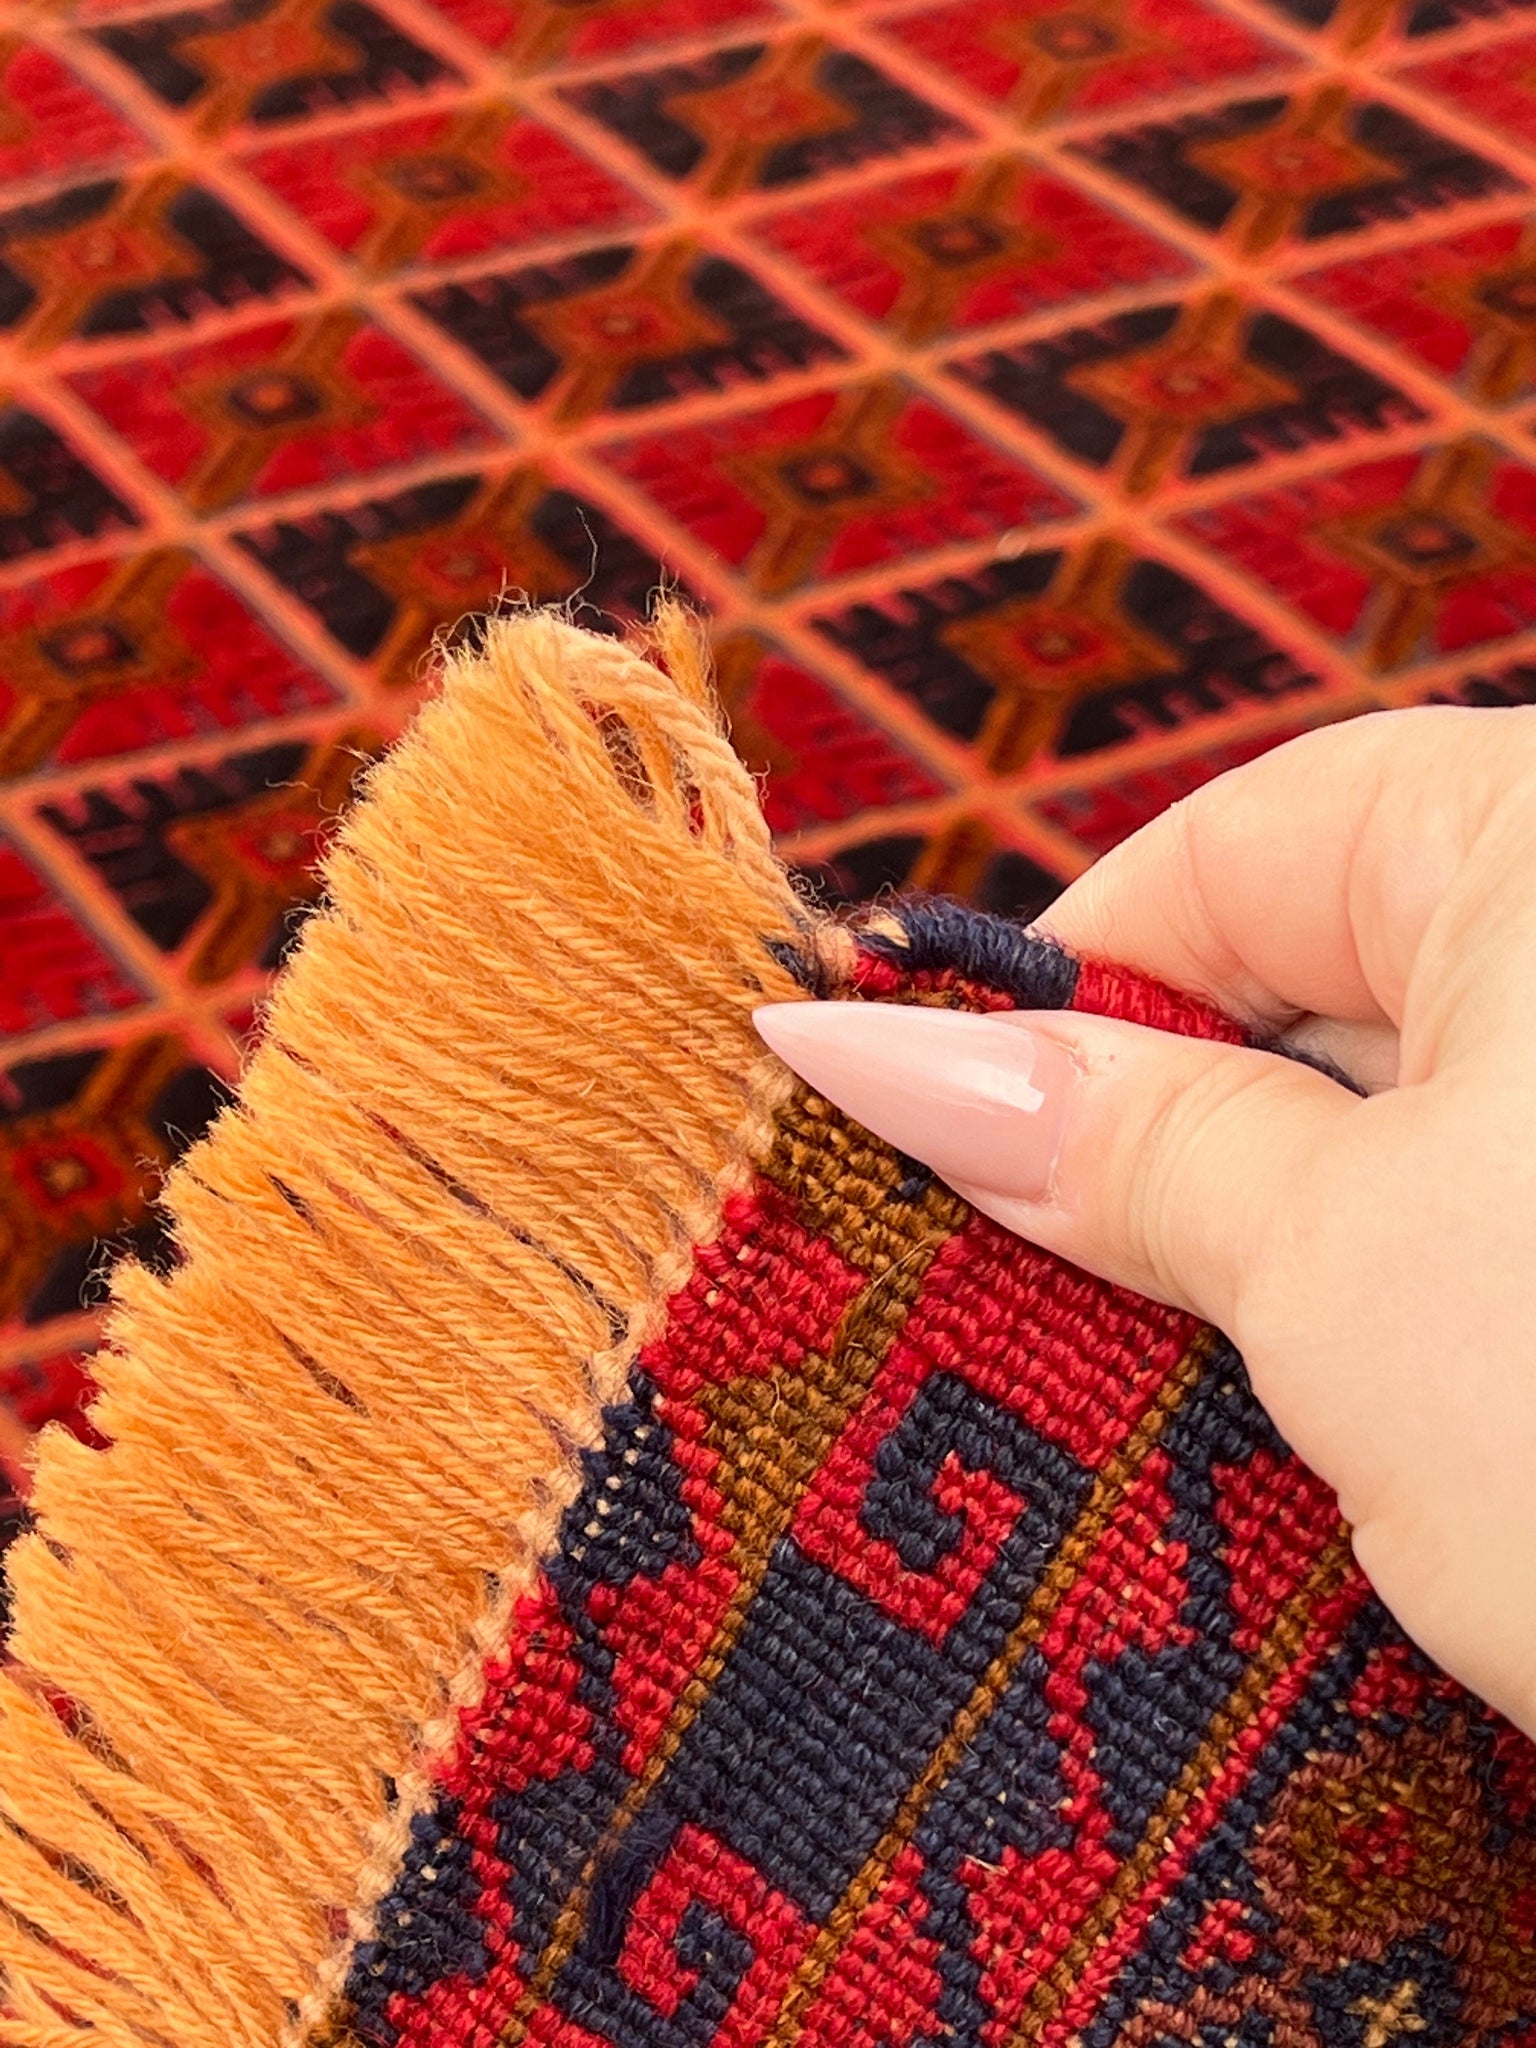 5x7 (150x215) Fair Trade Handmade Afghan Rug | Cherry Red Orange Black Taupe Crimson Red Midnight Blue | Hand Knotted Geometric Turkish Wool